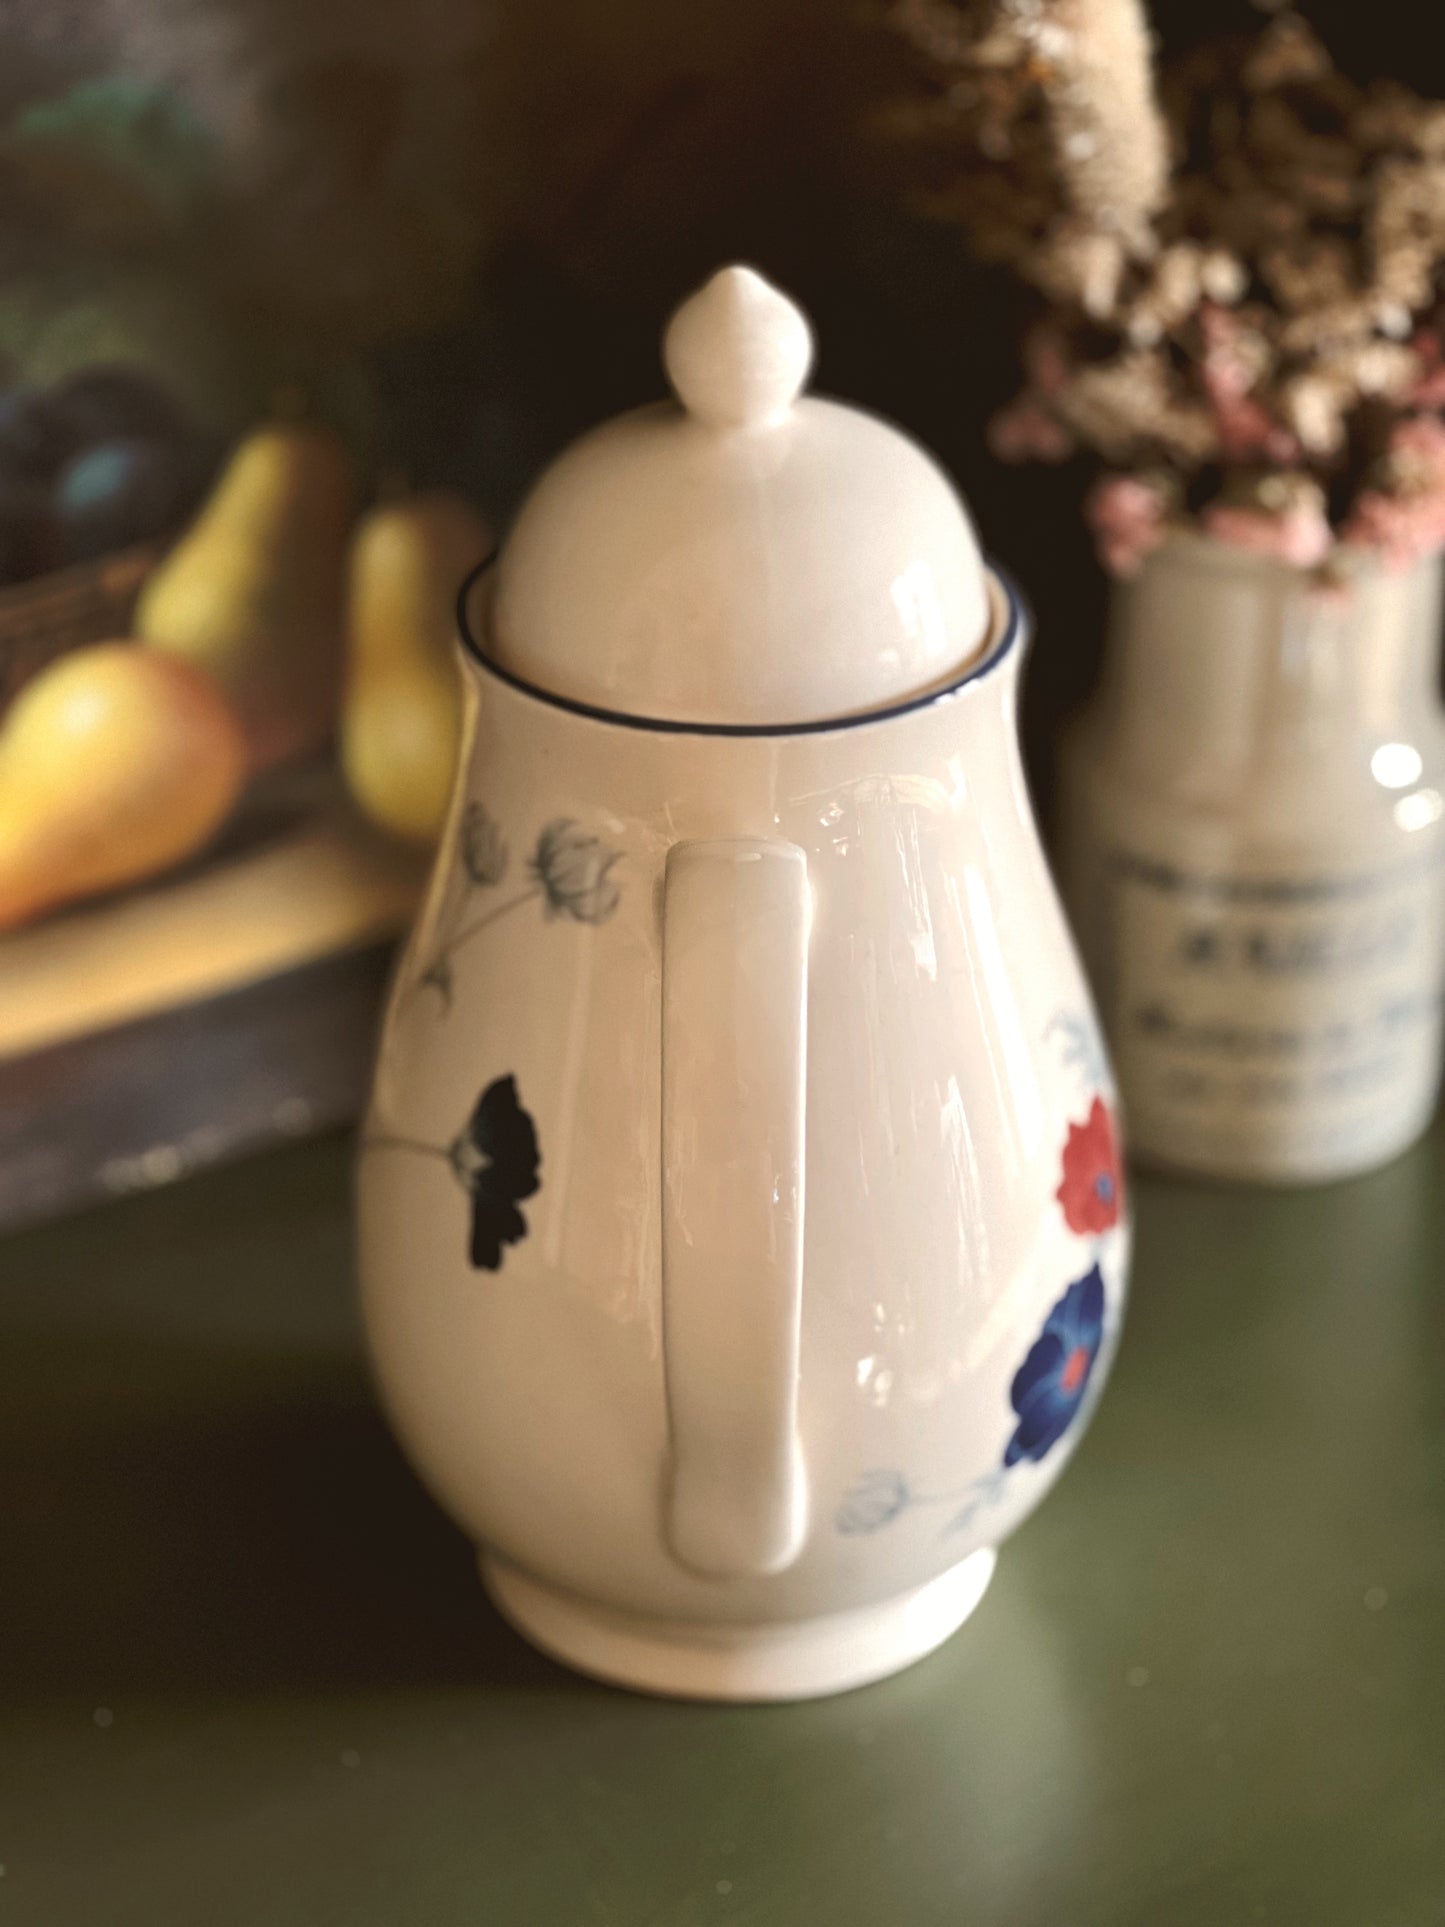 Vintage Noritake Keltcraft Harlequin Tea/Coffee Pot